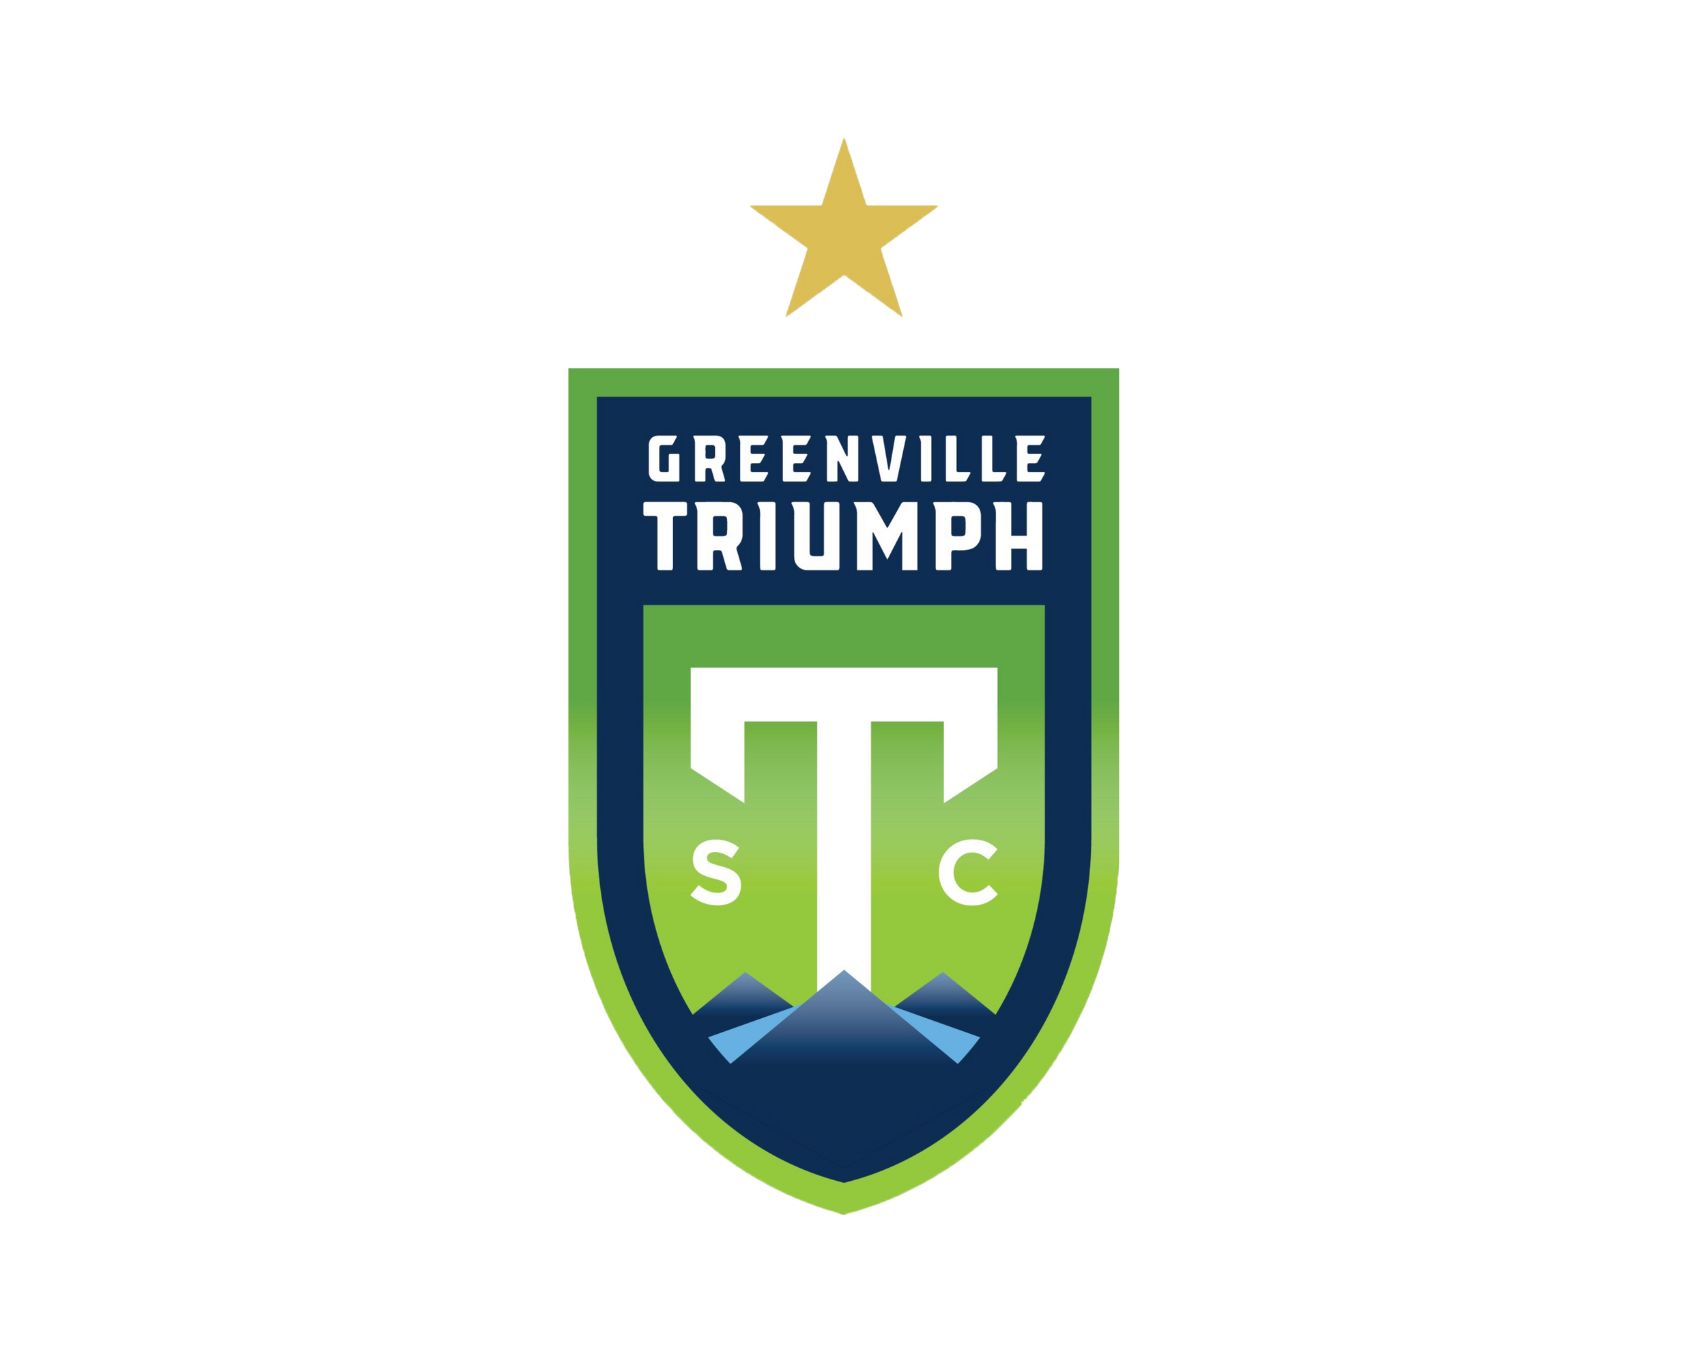 greenville-triumph-sc-25-football-club-facts